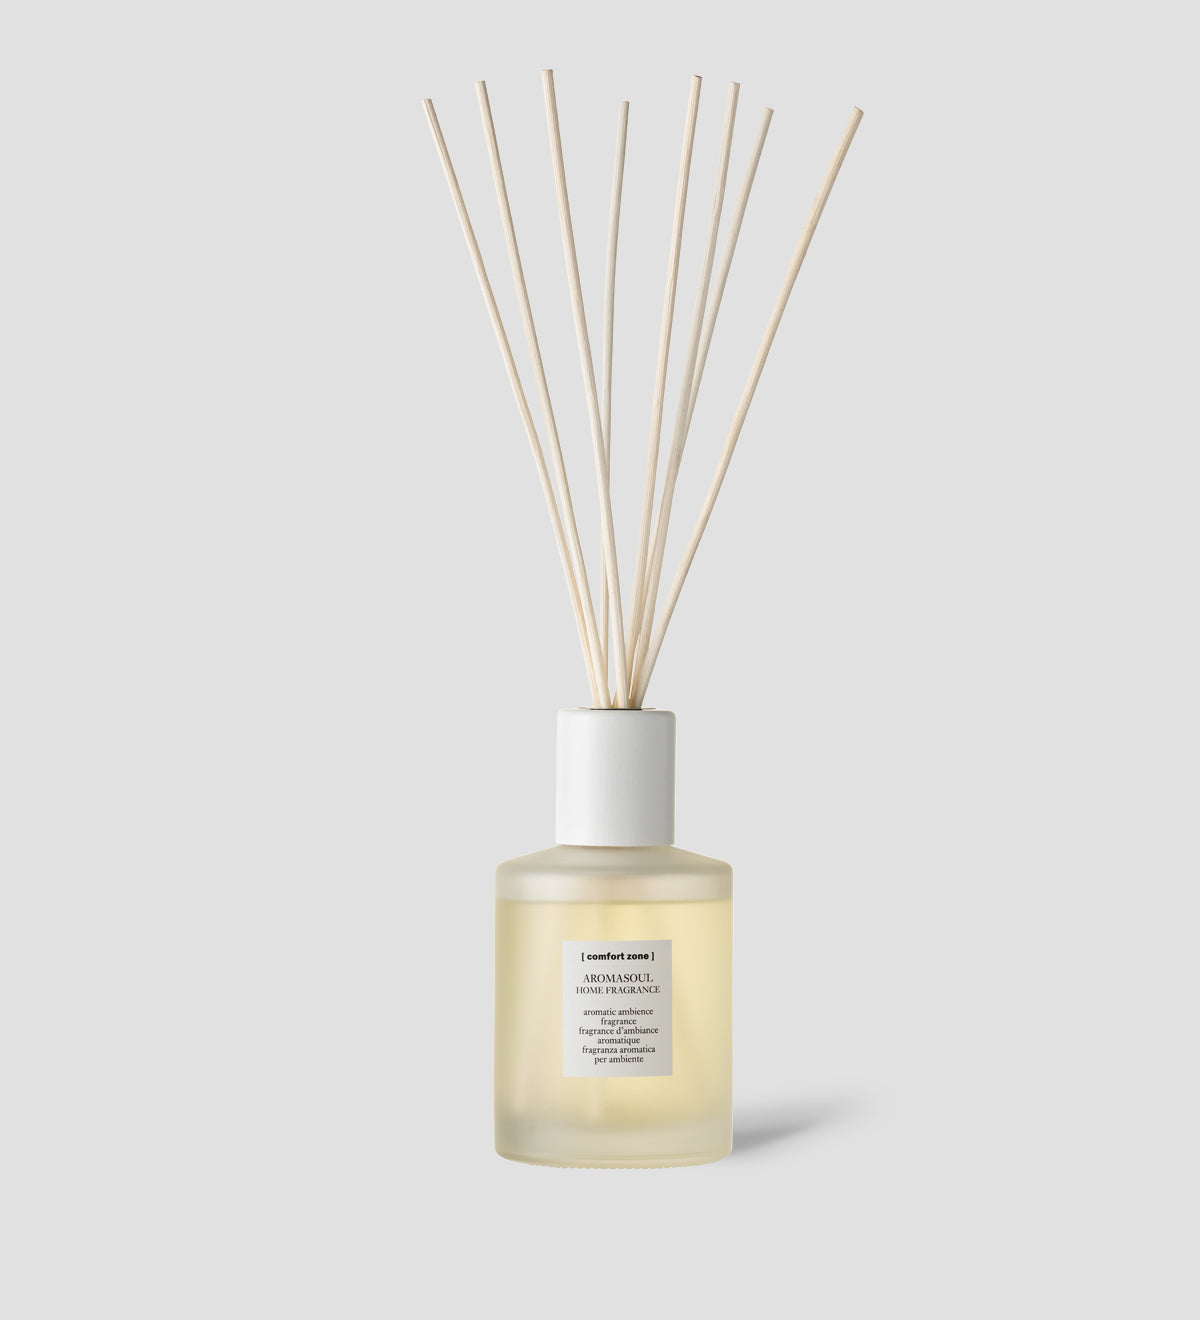 Comfort Zone: AROMASOUL HOME FRAGRANCE Room fragrance diffuser-1